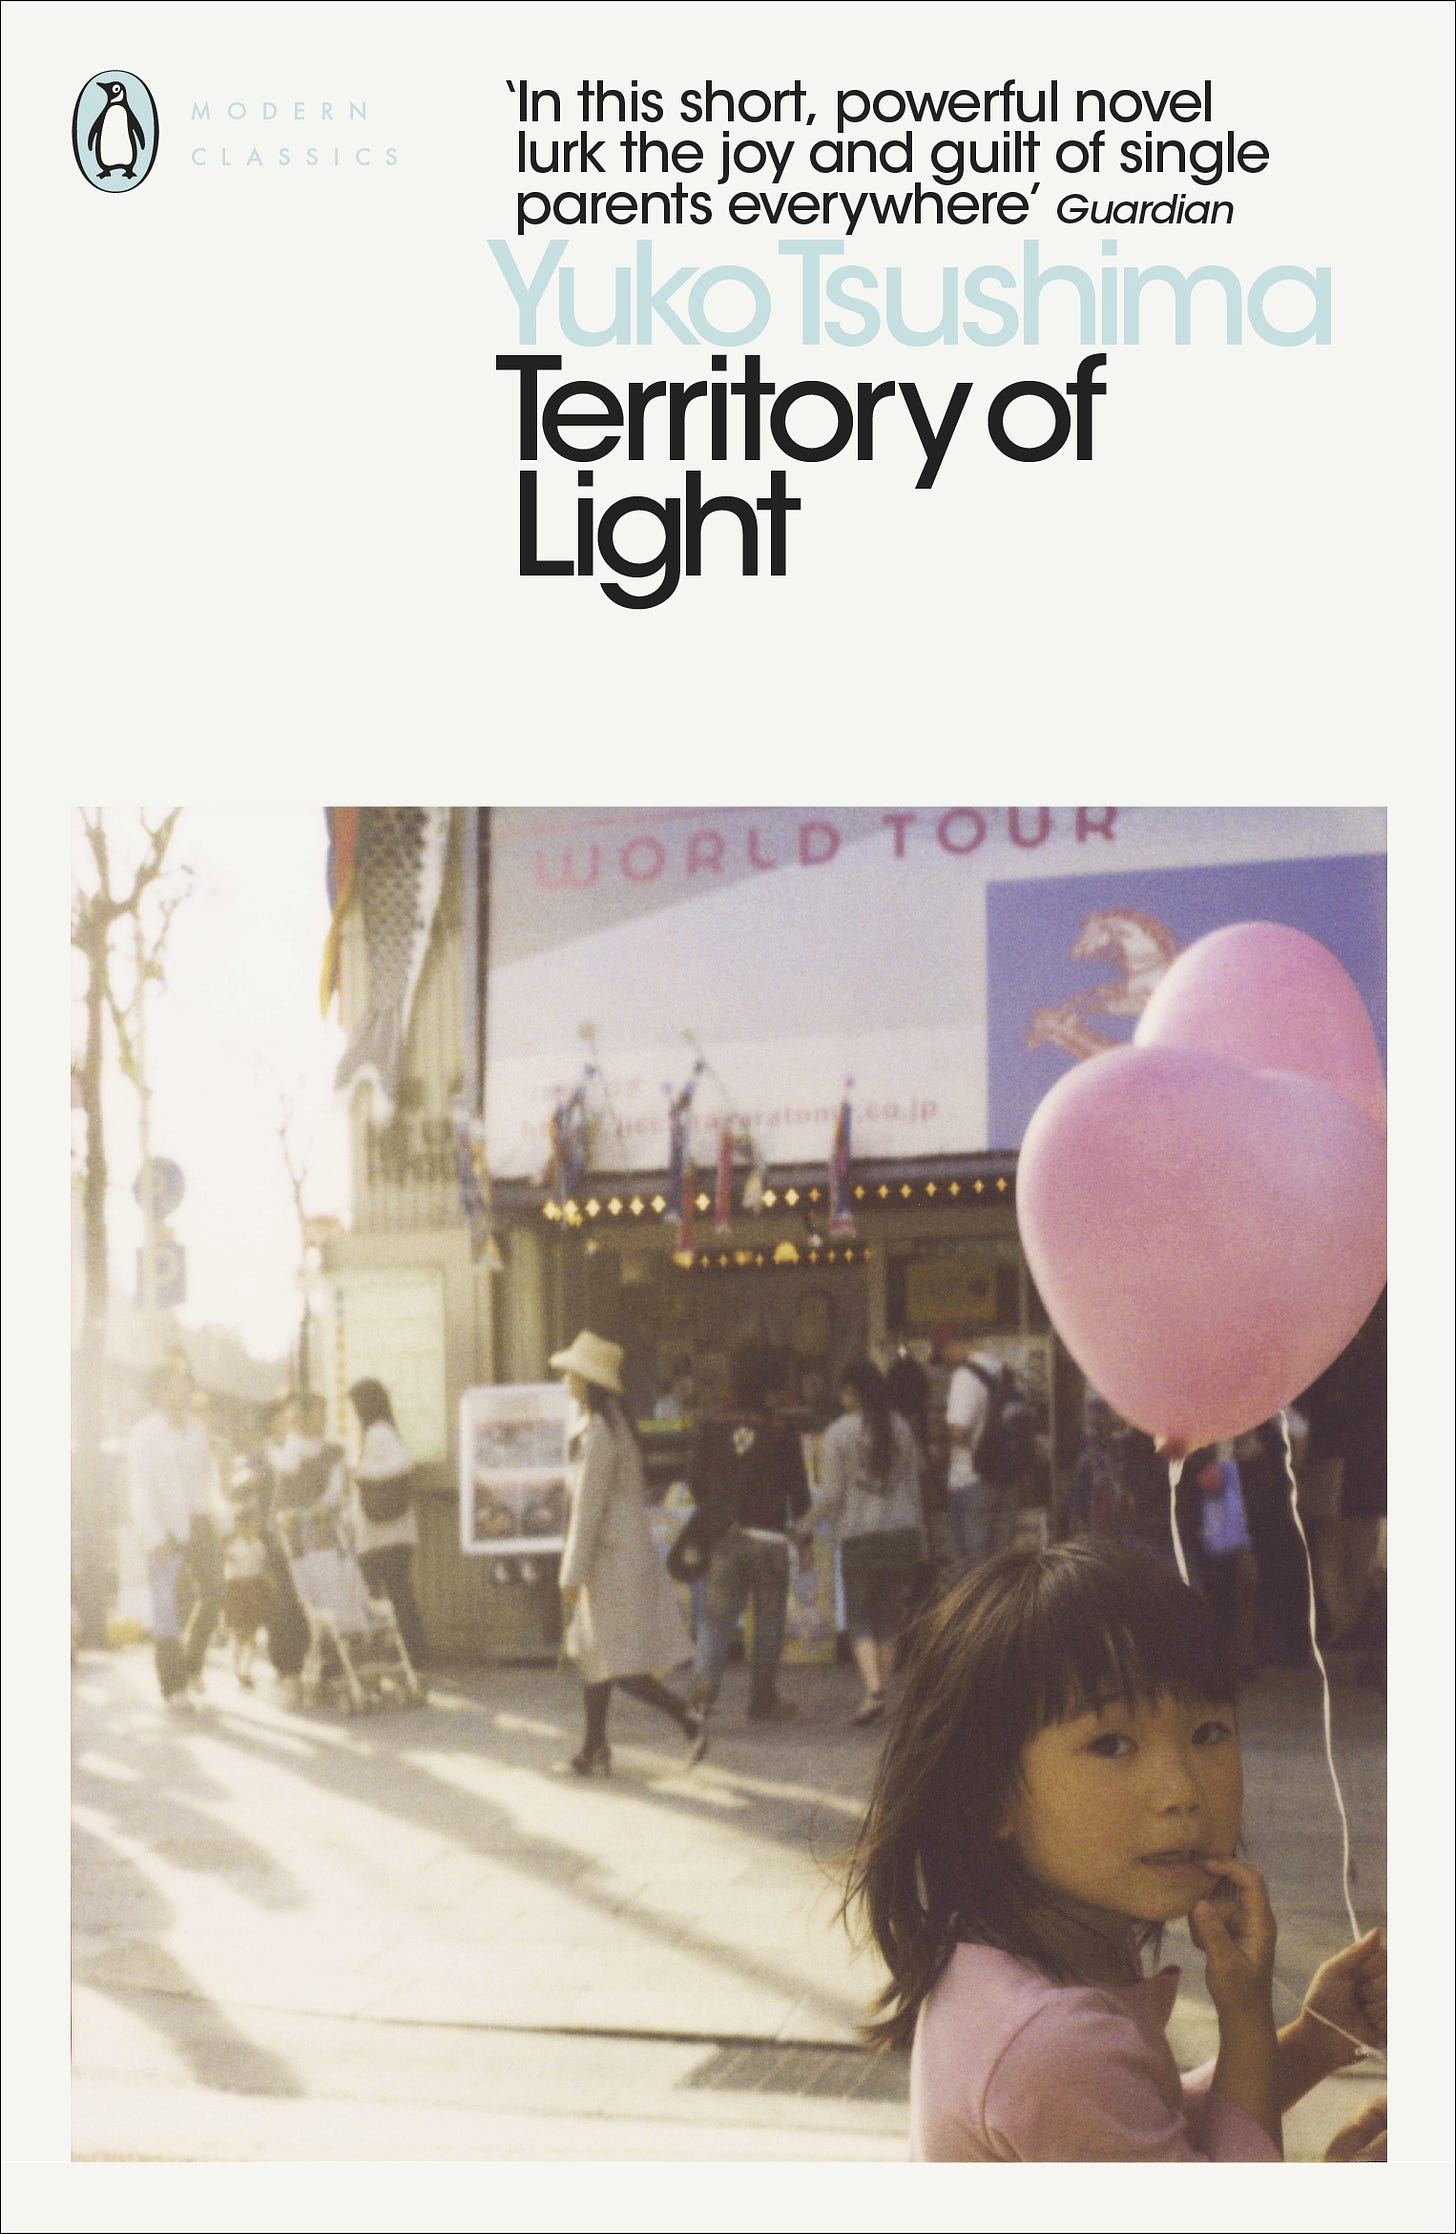 The cover of Yuko Tsushima's Territory of Light book